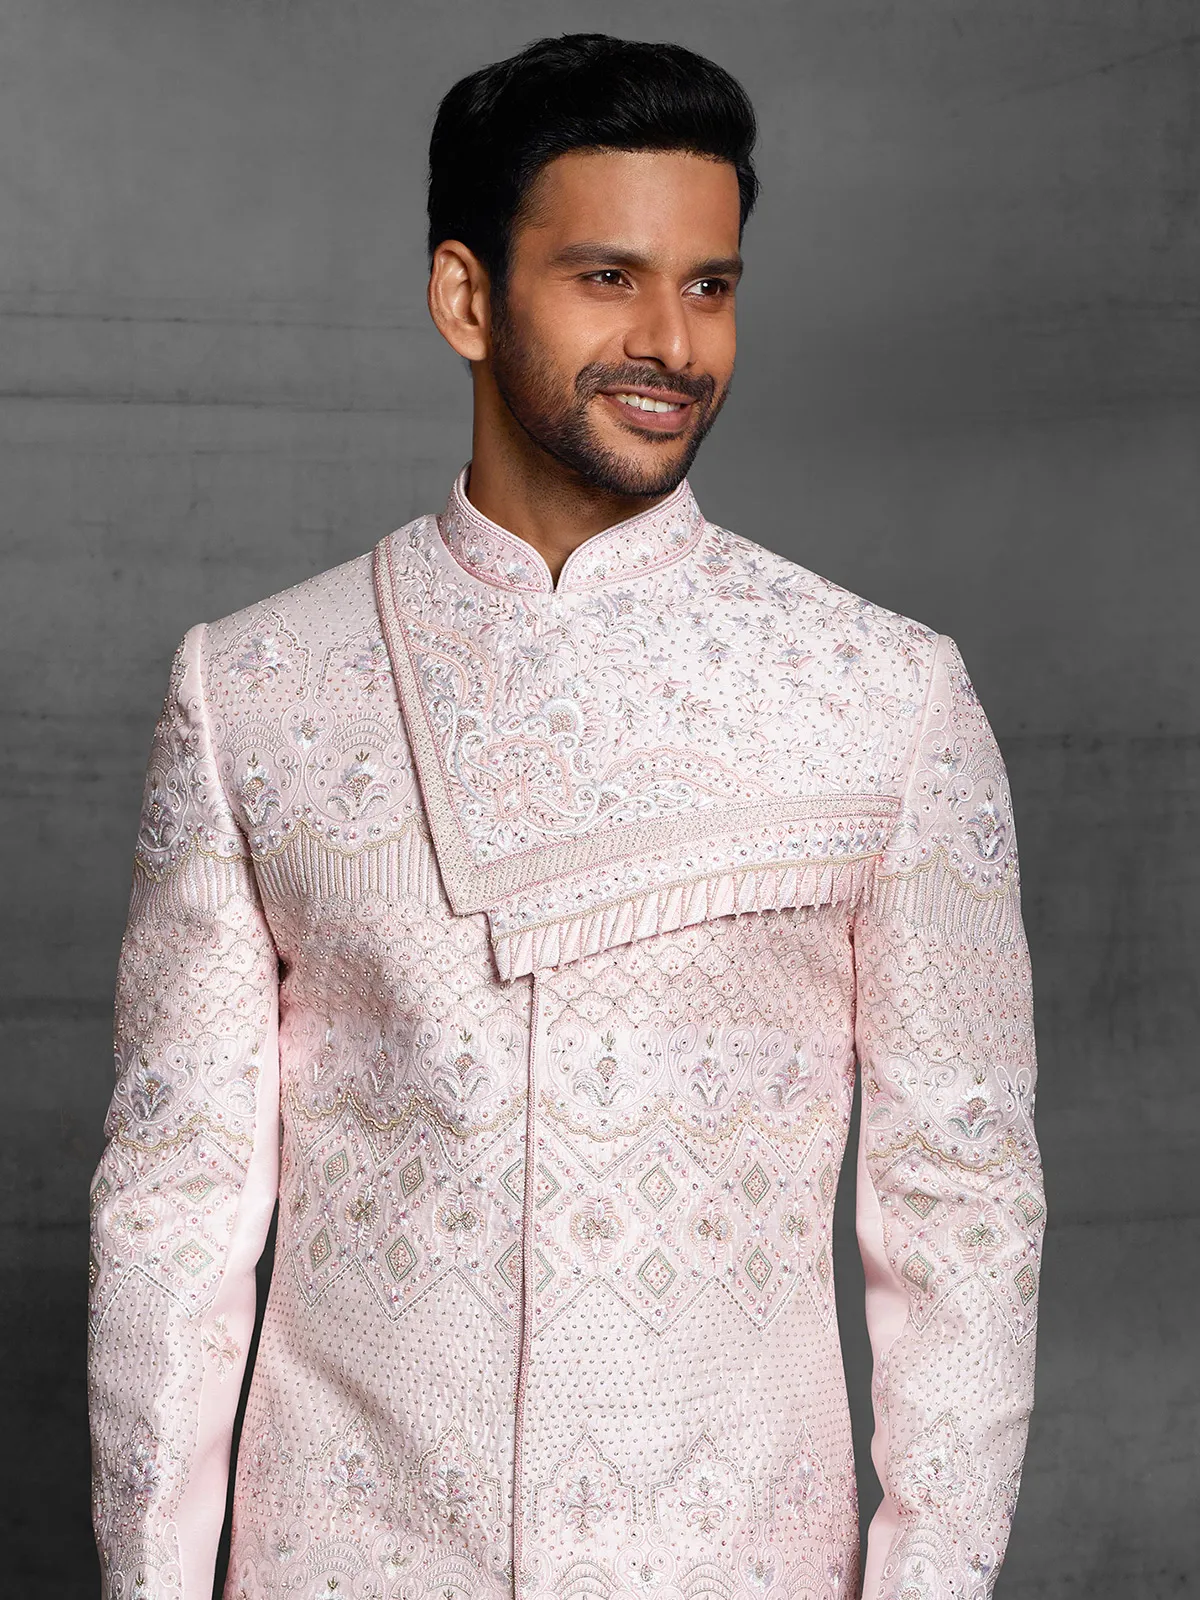 Light pink hue silk fabric wedding wear sherwani